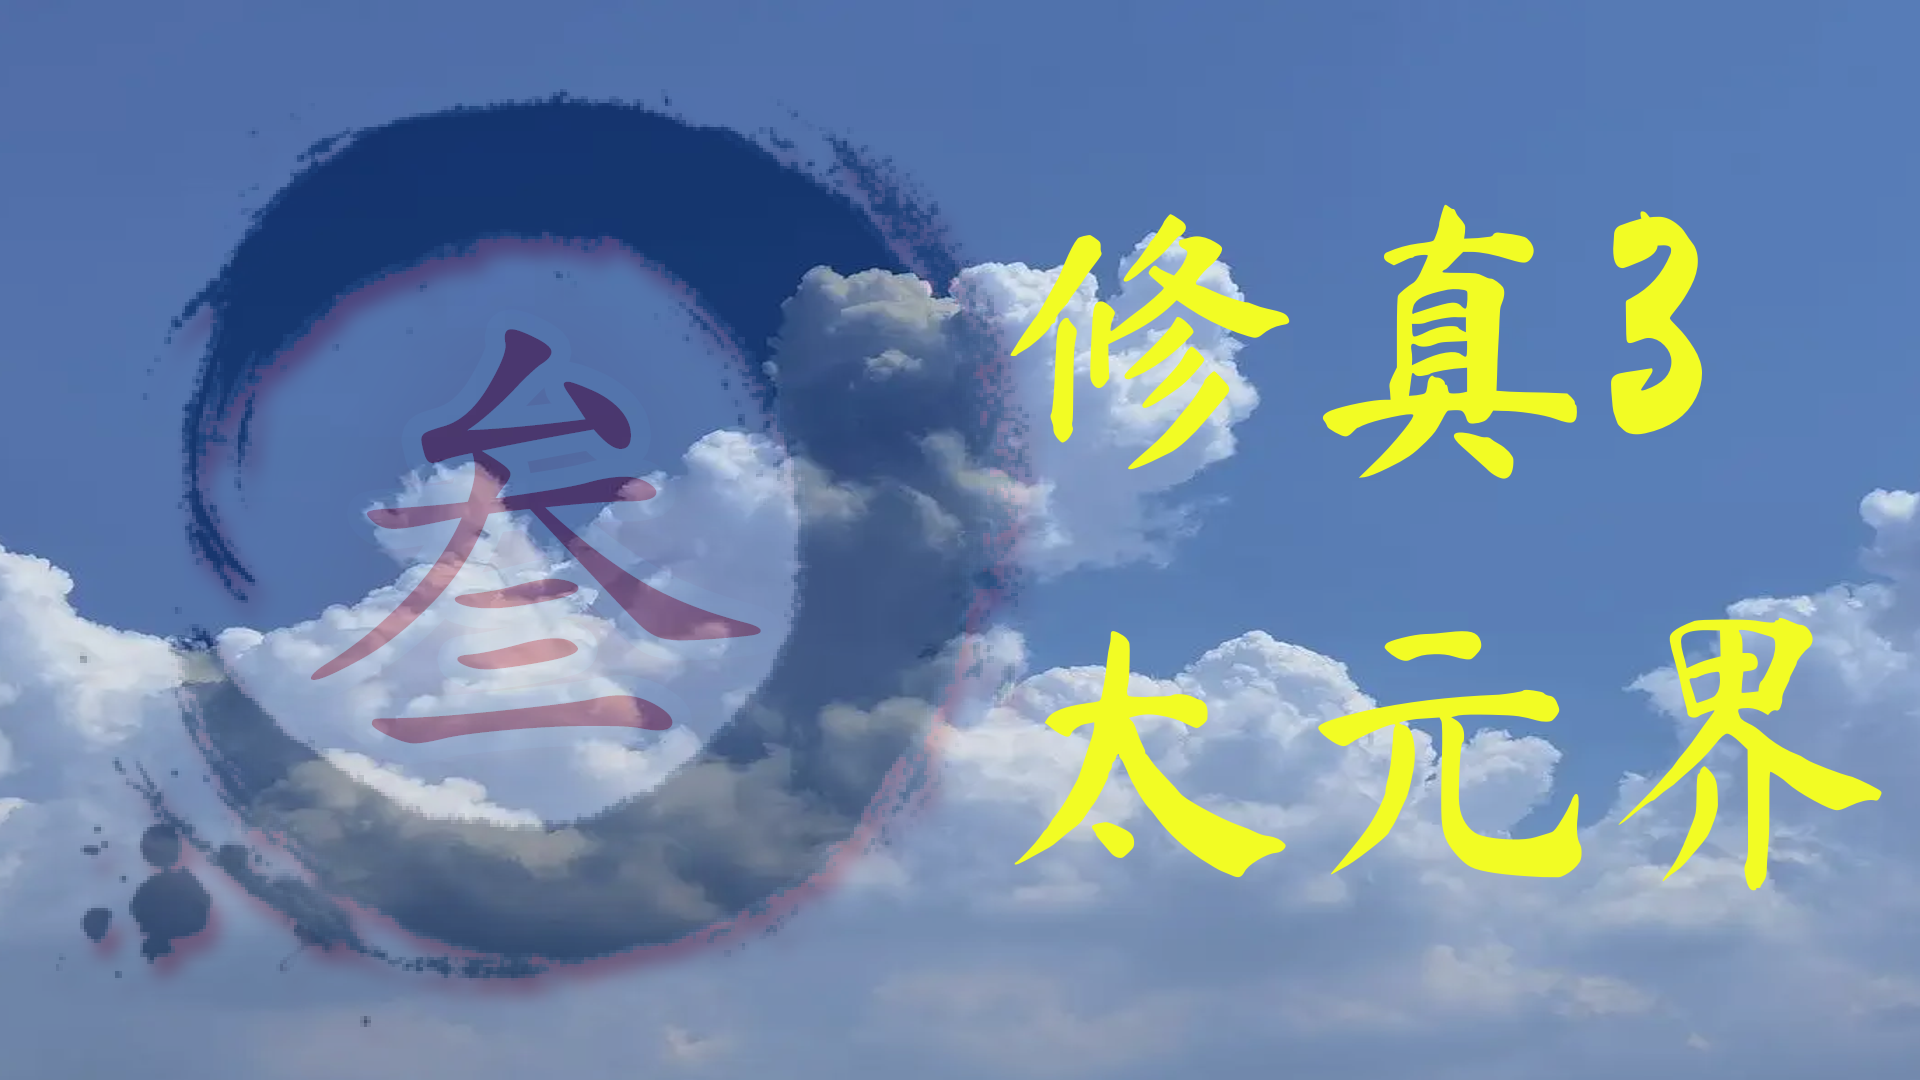 Banner of Penanaman 3 Alam Taiyuan 1.68